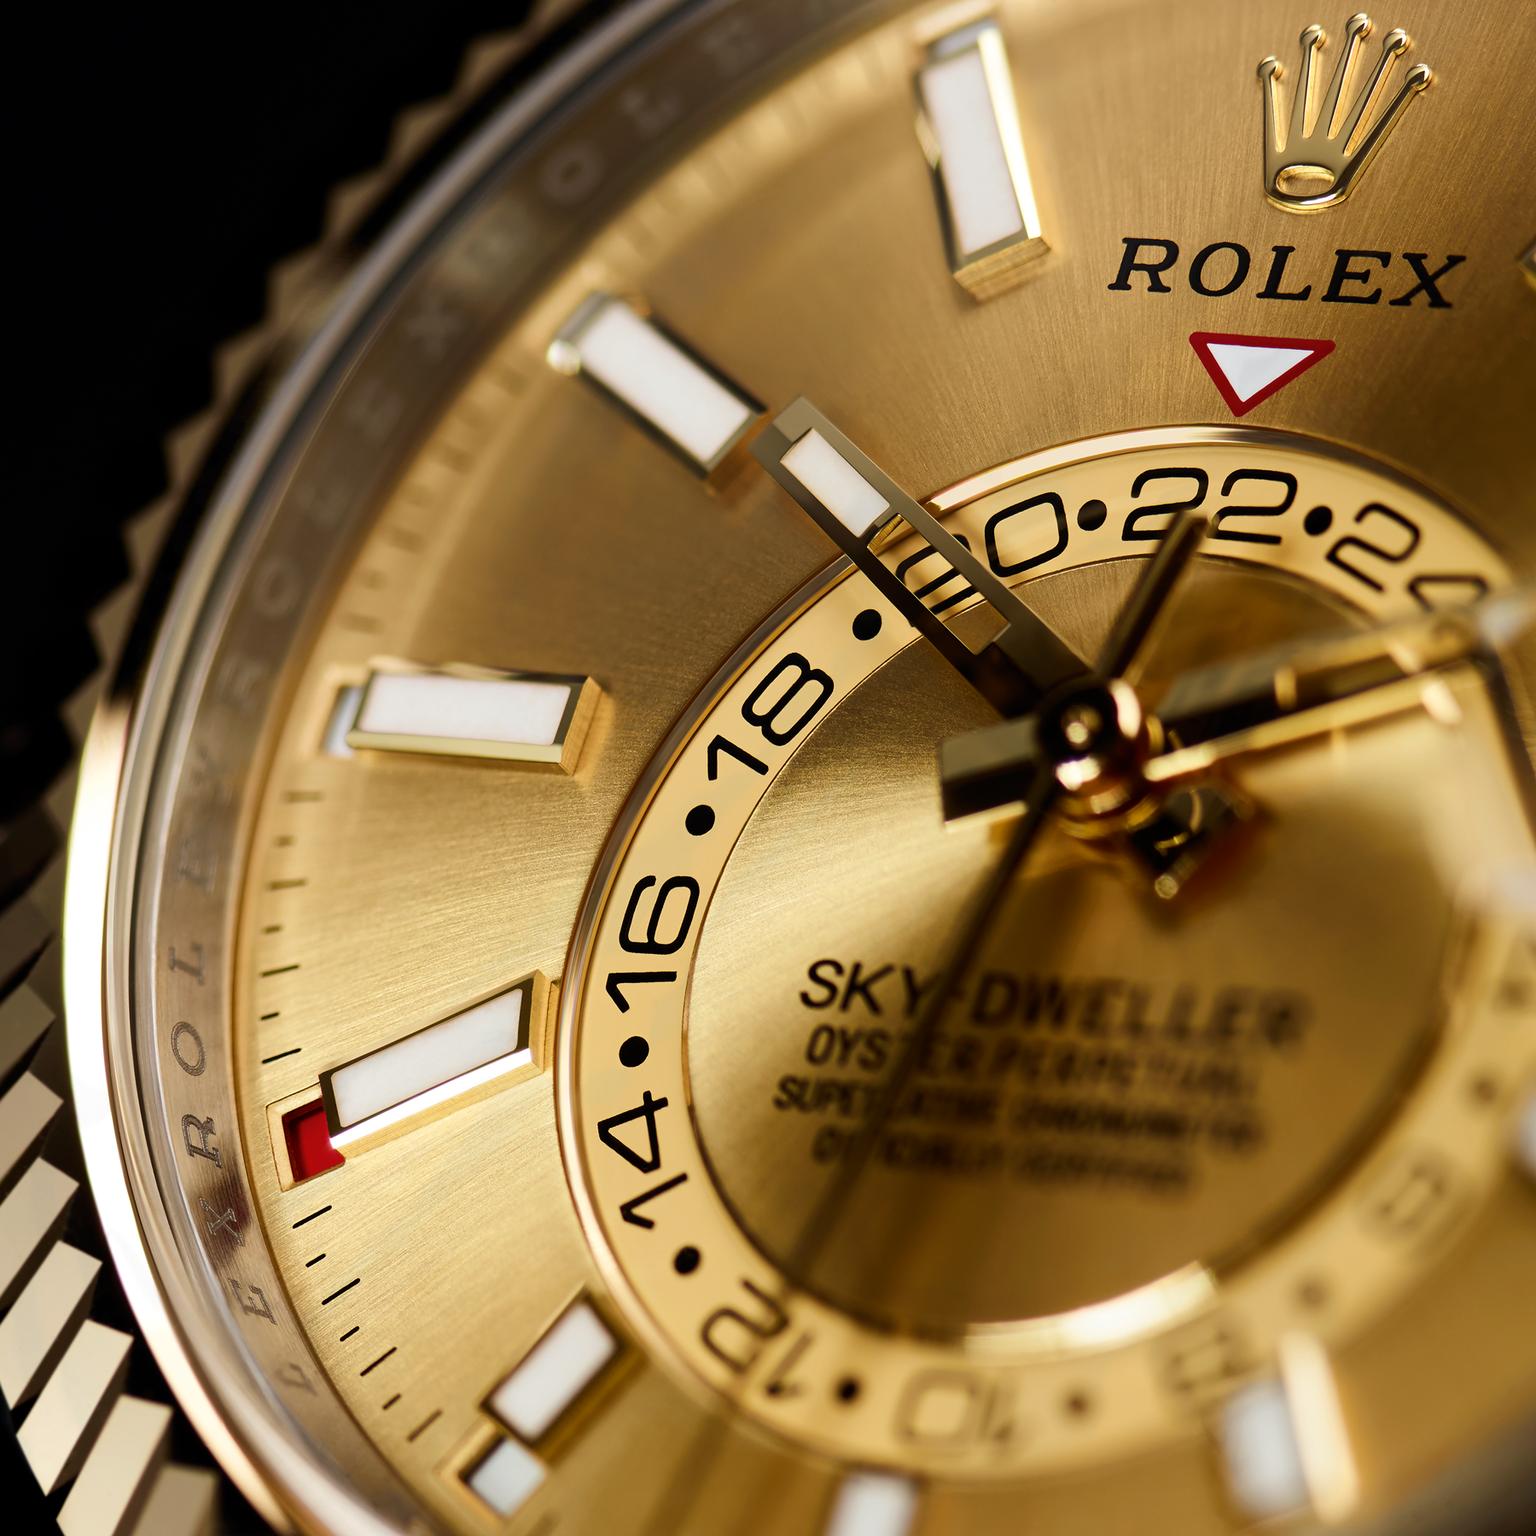 Rolex Sky-Dweller watch 2017 Rolesor model